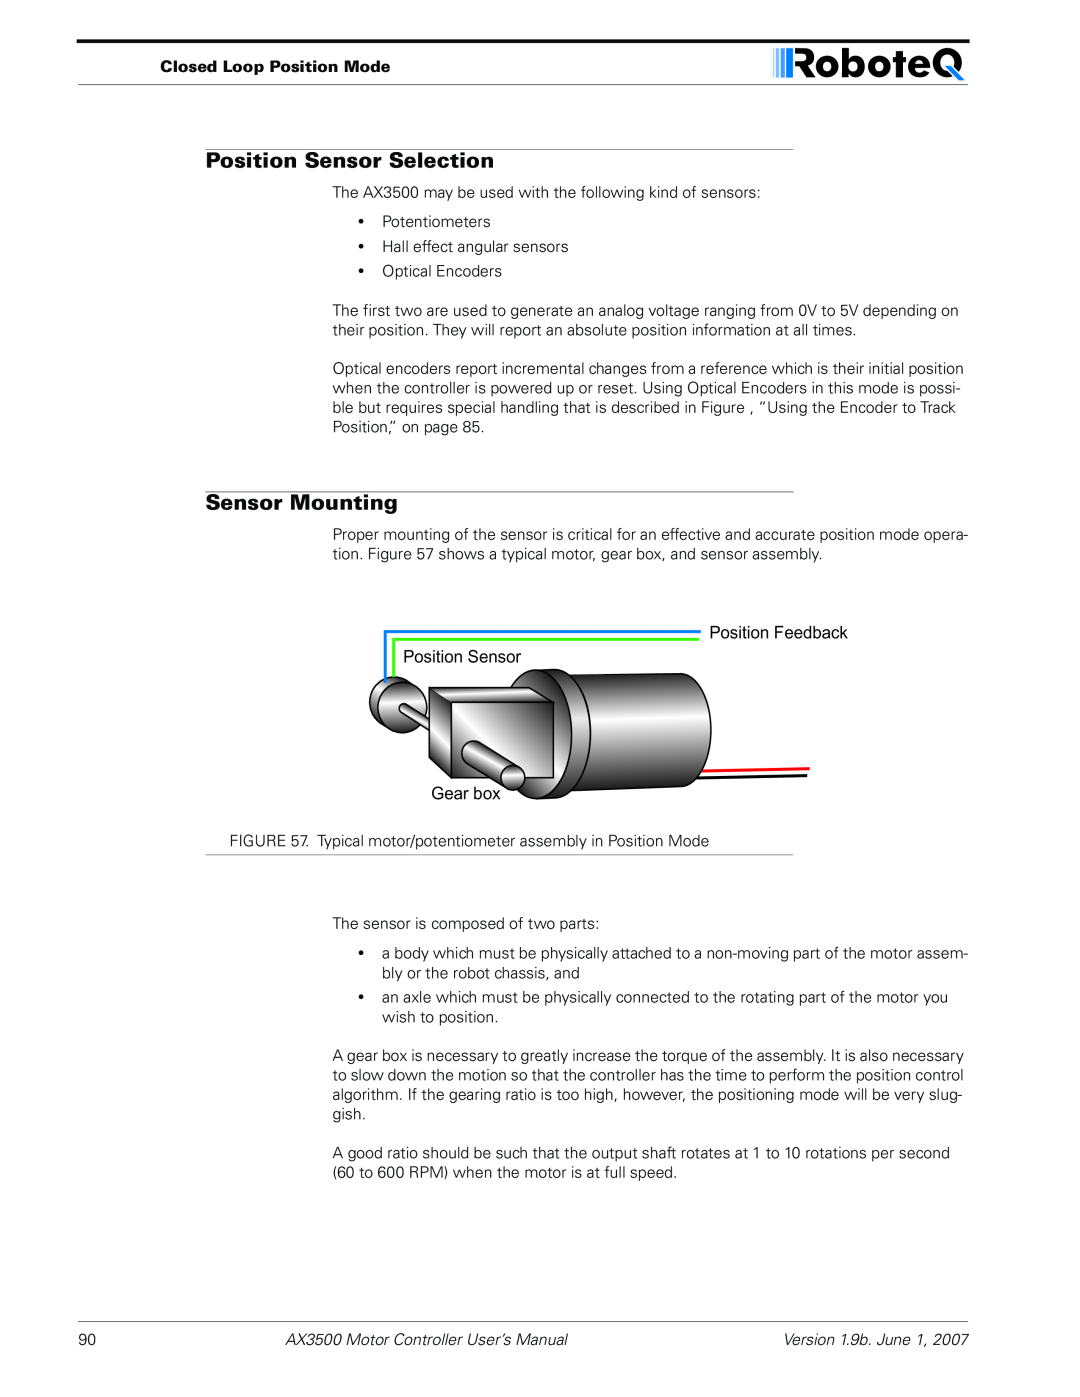 RoboteQ AX3500 user manual Position Sensor Selection, Sensor Mounting, Position Feedback Position Sensor Gear box 